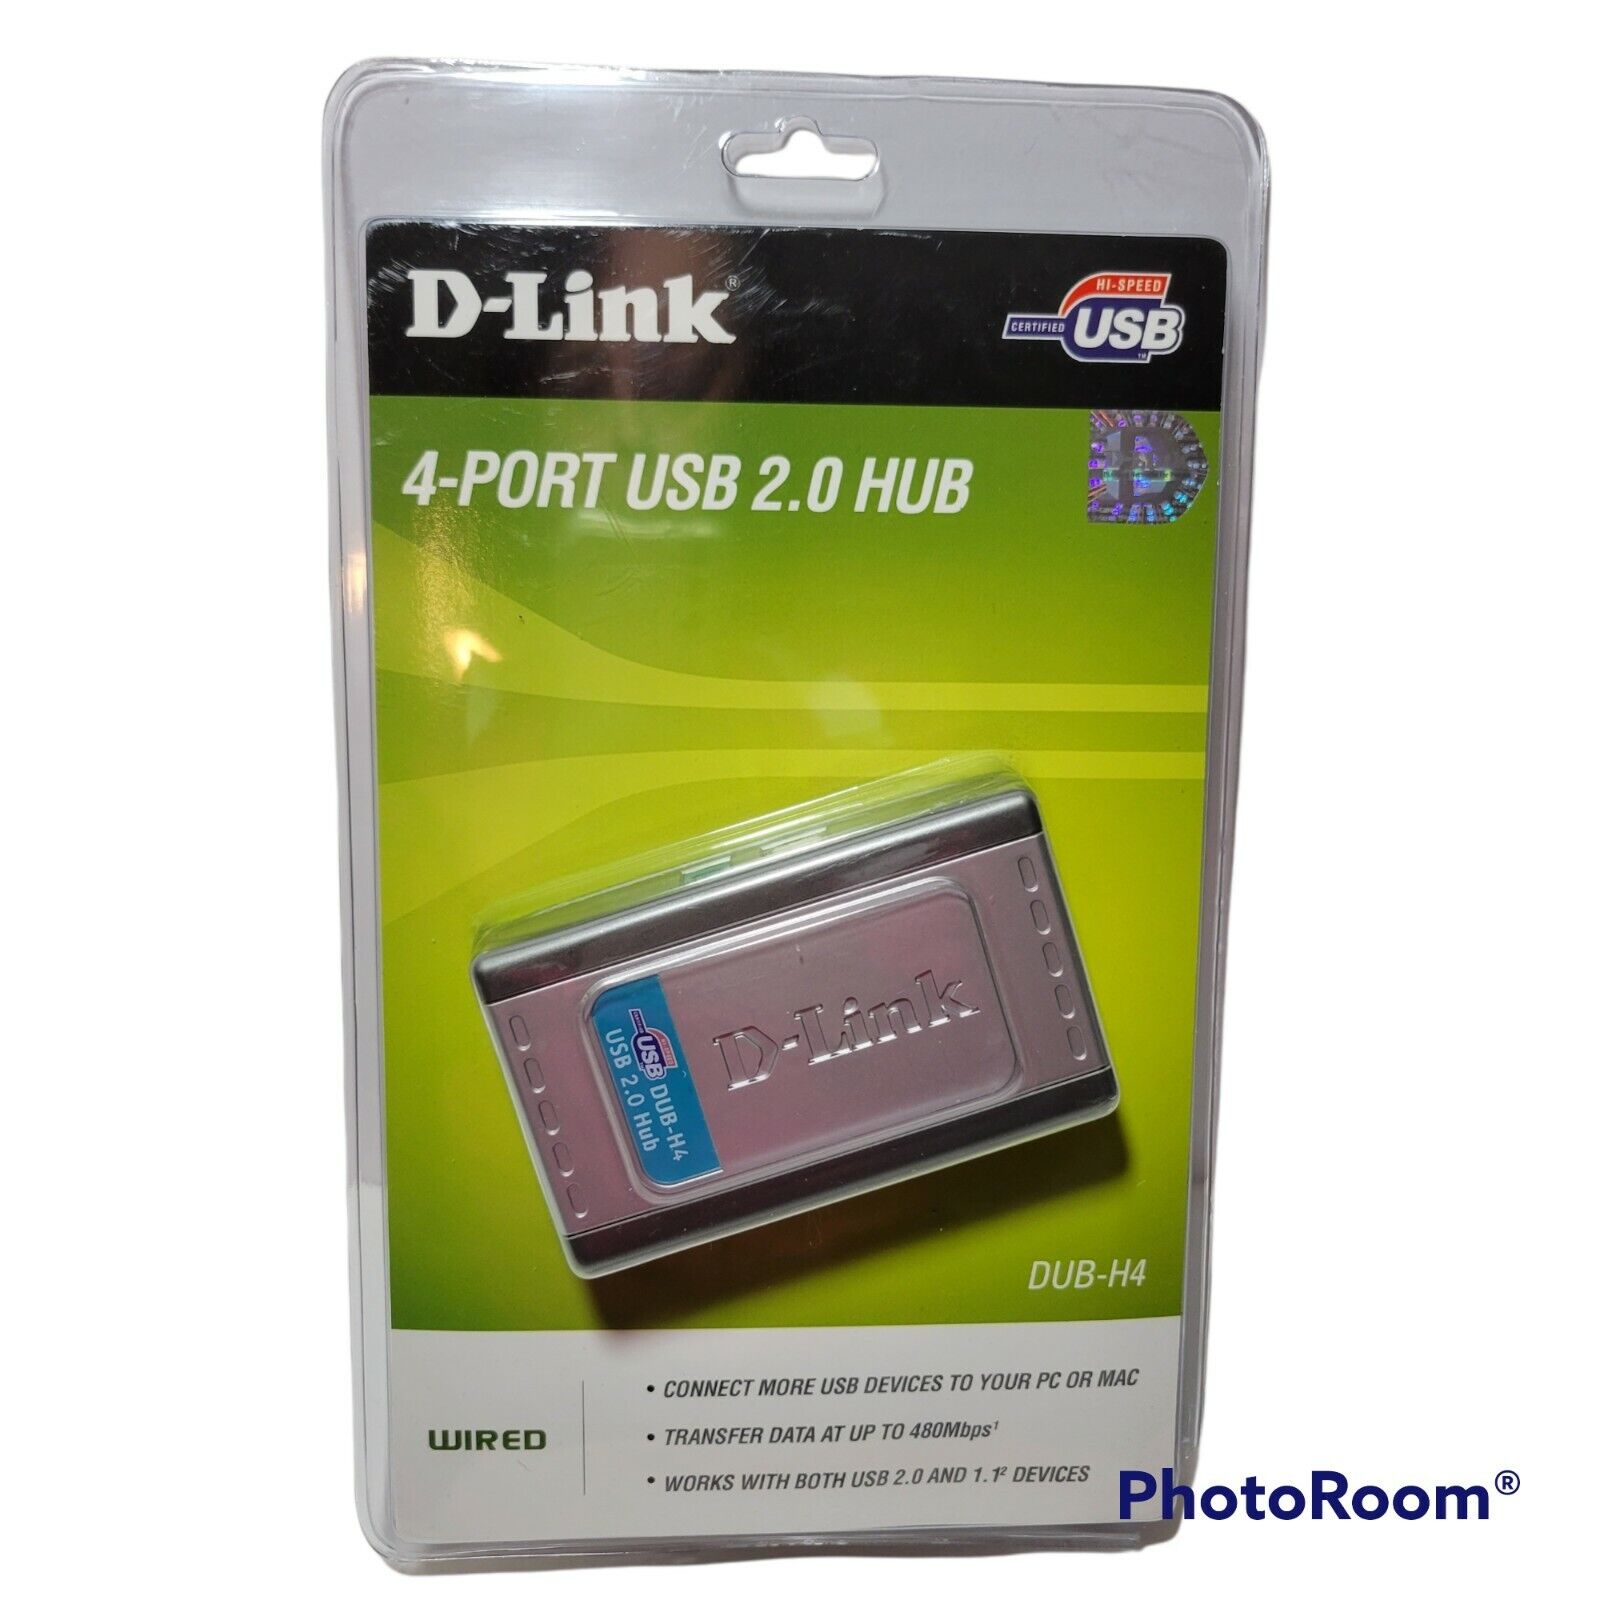 D-Link DUB-H4 Superlatite 4-Port USB 2.0 Fast Fac Wired Finally popular brand Charge External Hubs